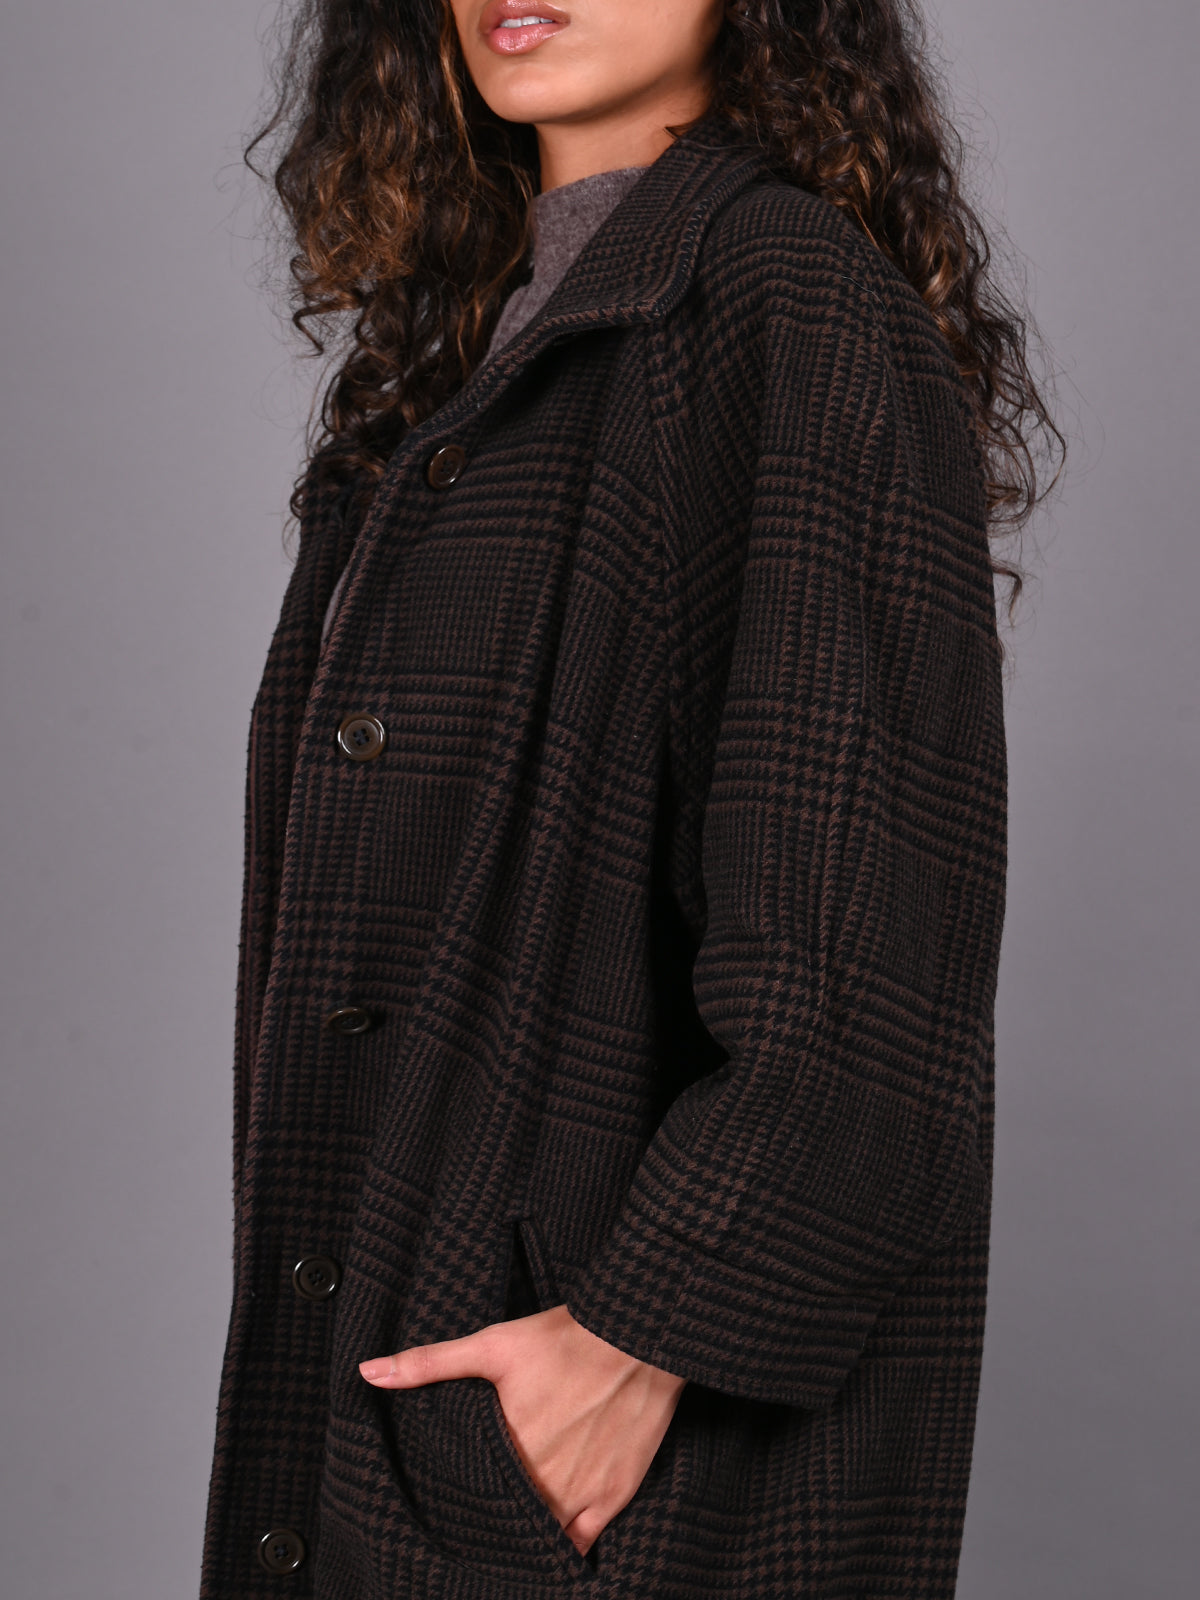 Odette Black and Brown Patterned Woollen Overcoat for Women